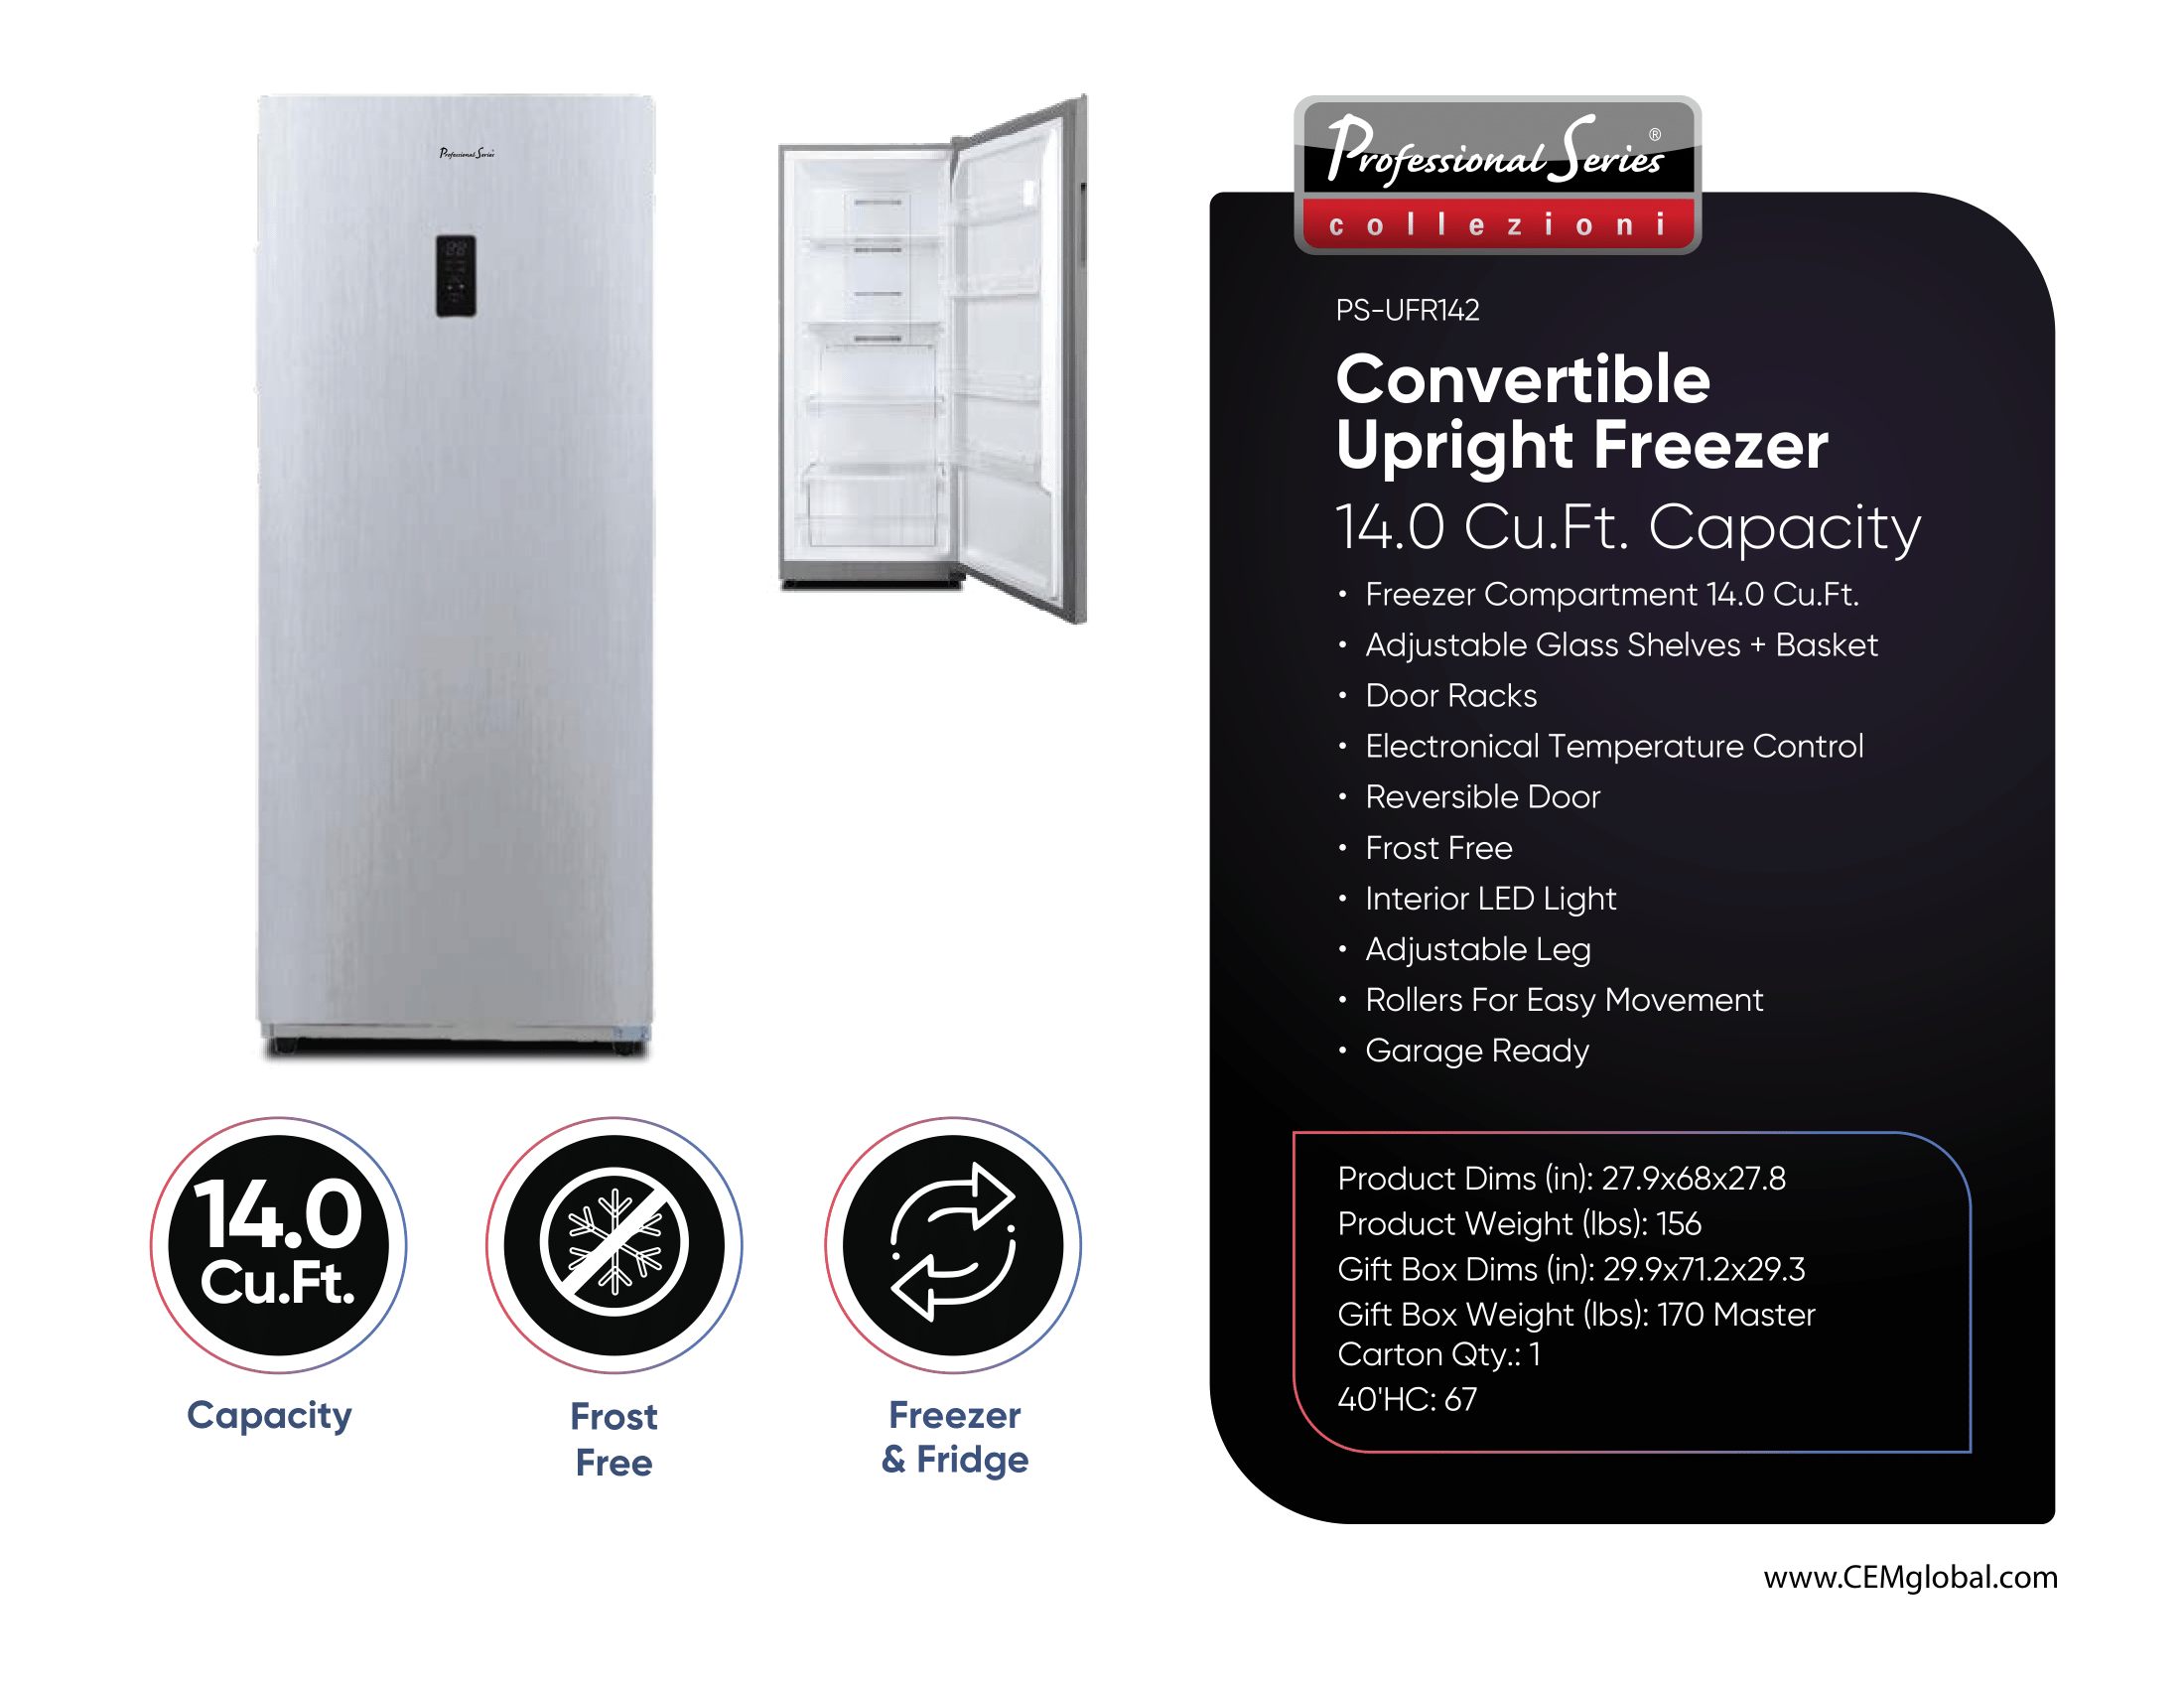 Convertible Upright Freezer 14.0 Cu.Ft.